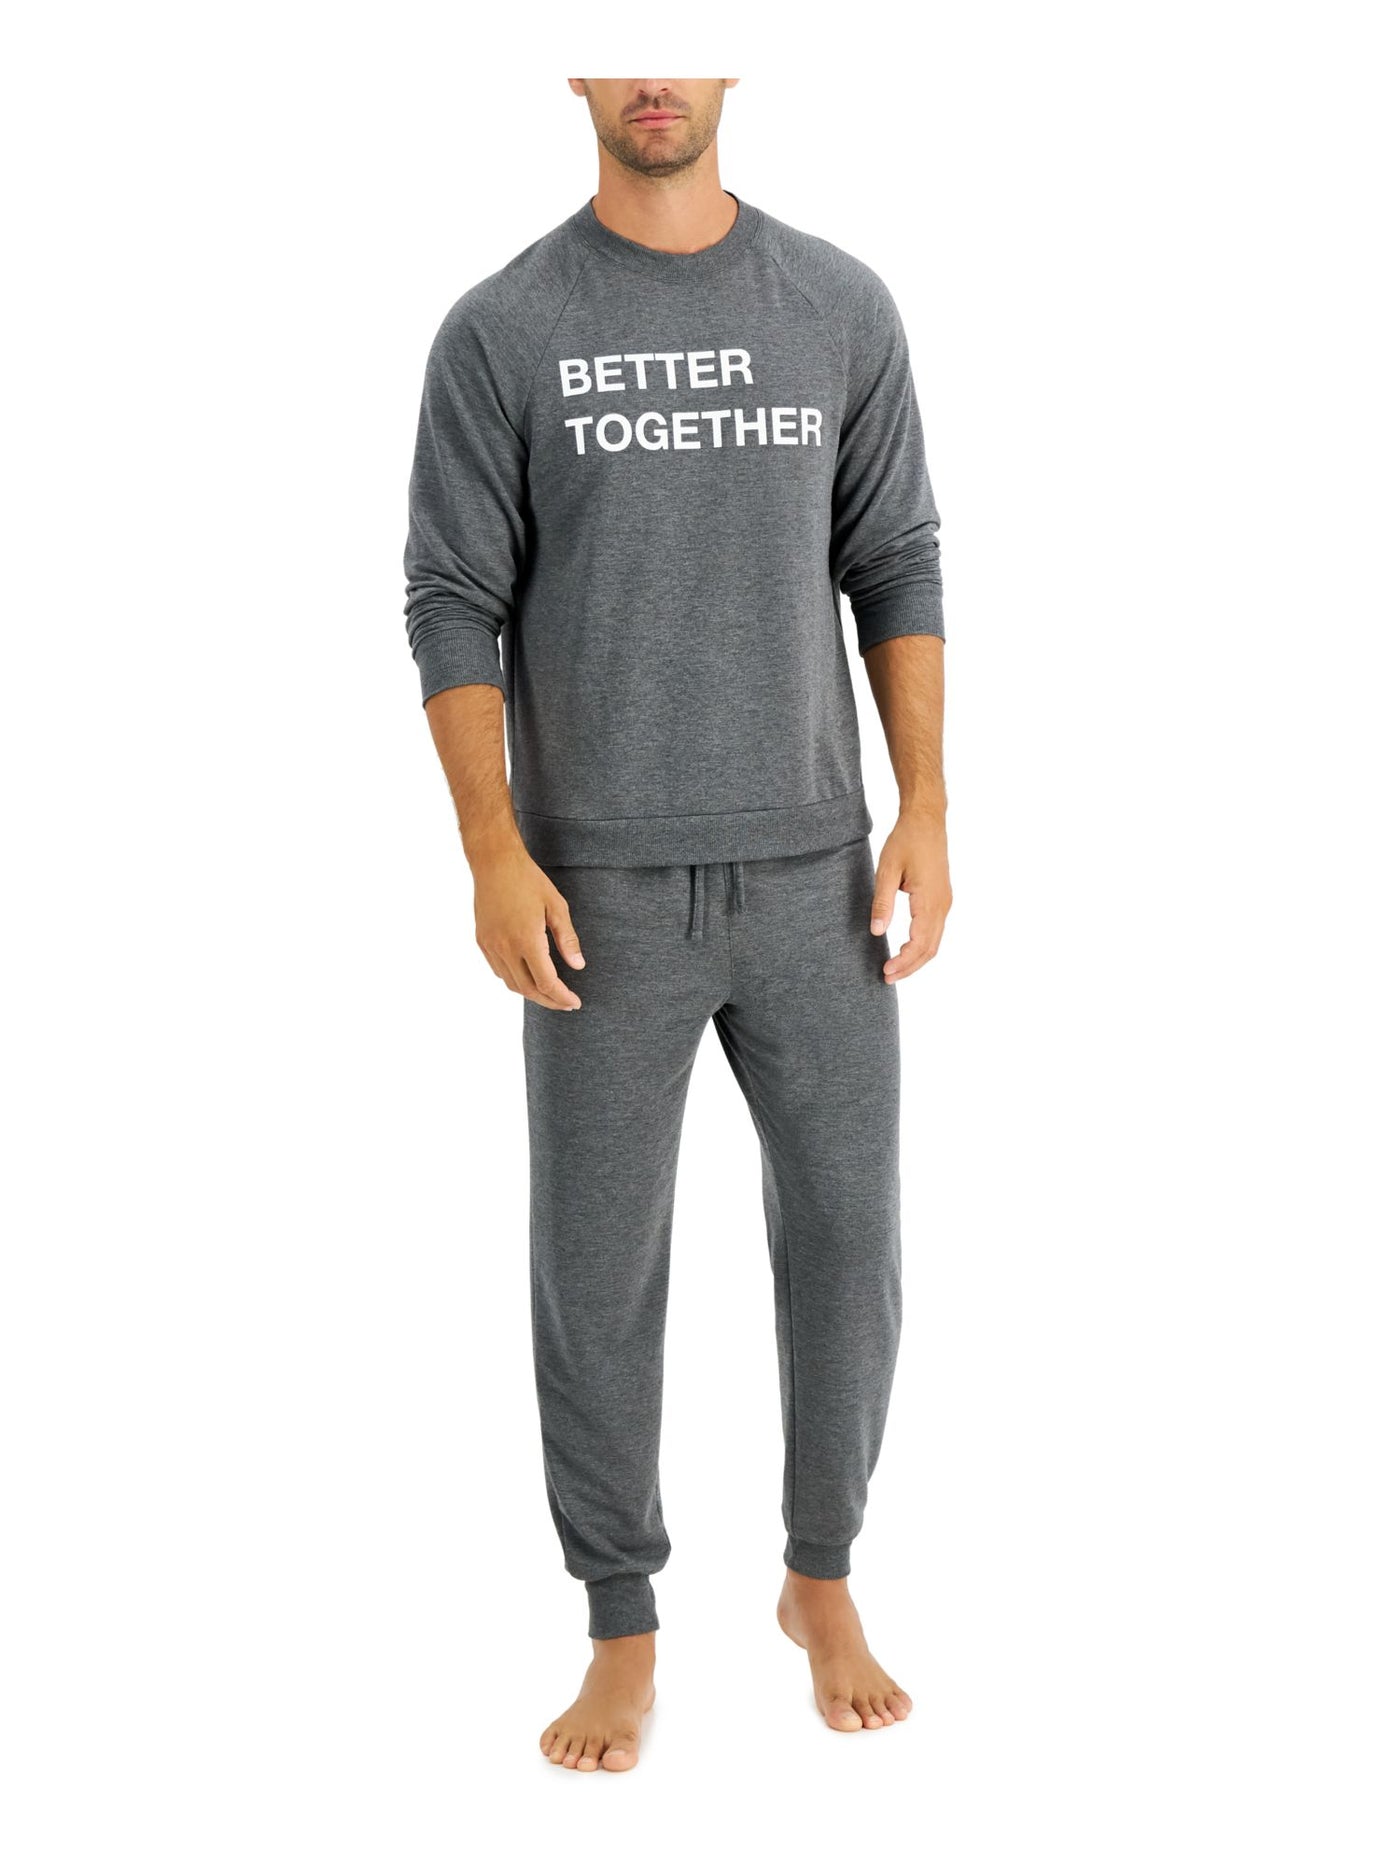 FAMILY PJs Mens Gray Graphic Drawstring T-Shirt Top Cuffed Pants Pajamas L